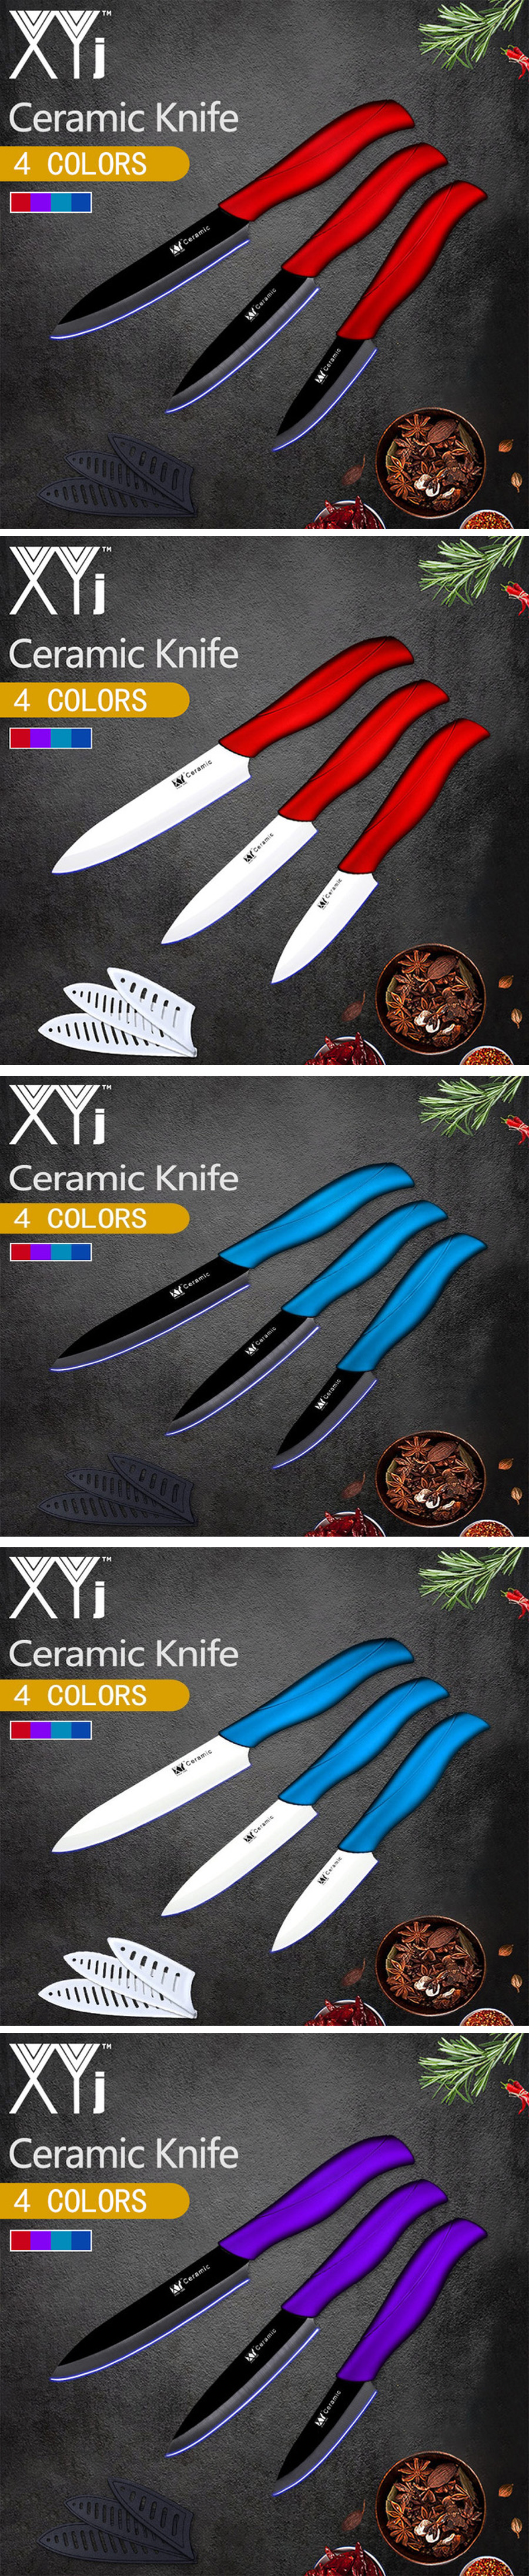 XYJ-3PCS-Ceramic-Knife-Set-3quot-4quot-5quot-Kitchen-Knife-Set-Vegetable-Cutter-Slicing-Knife-Utilit-1416510-7